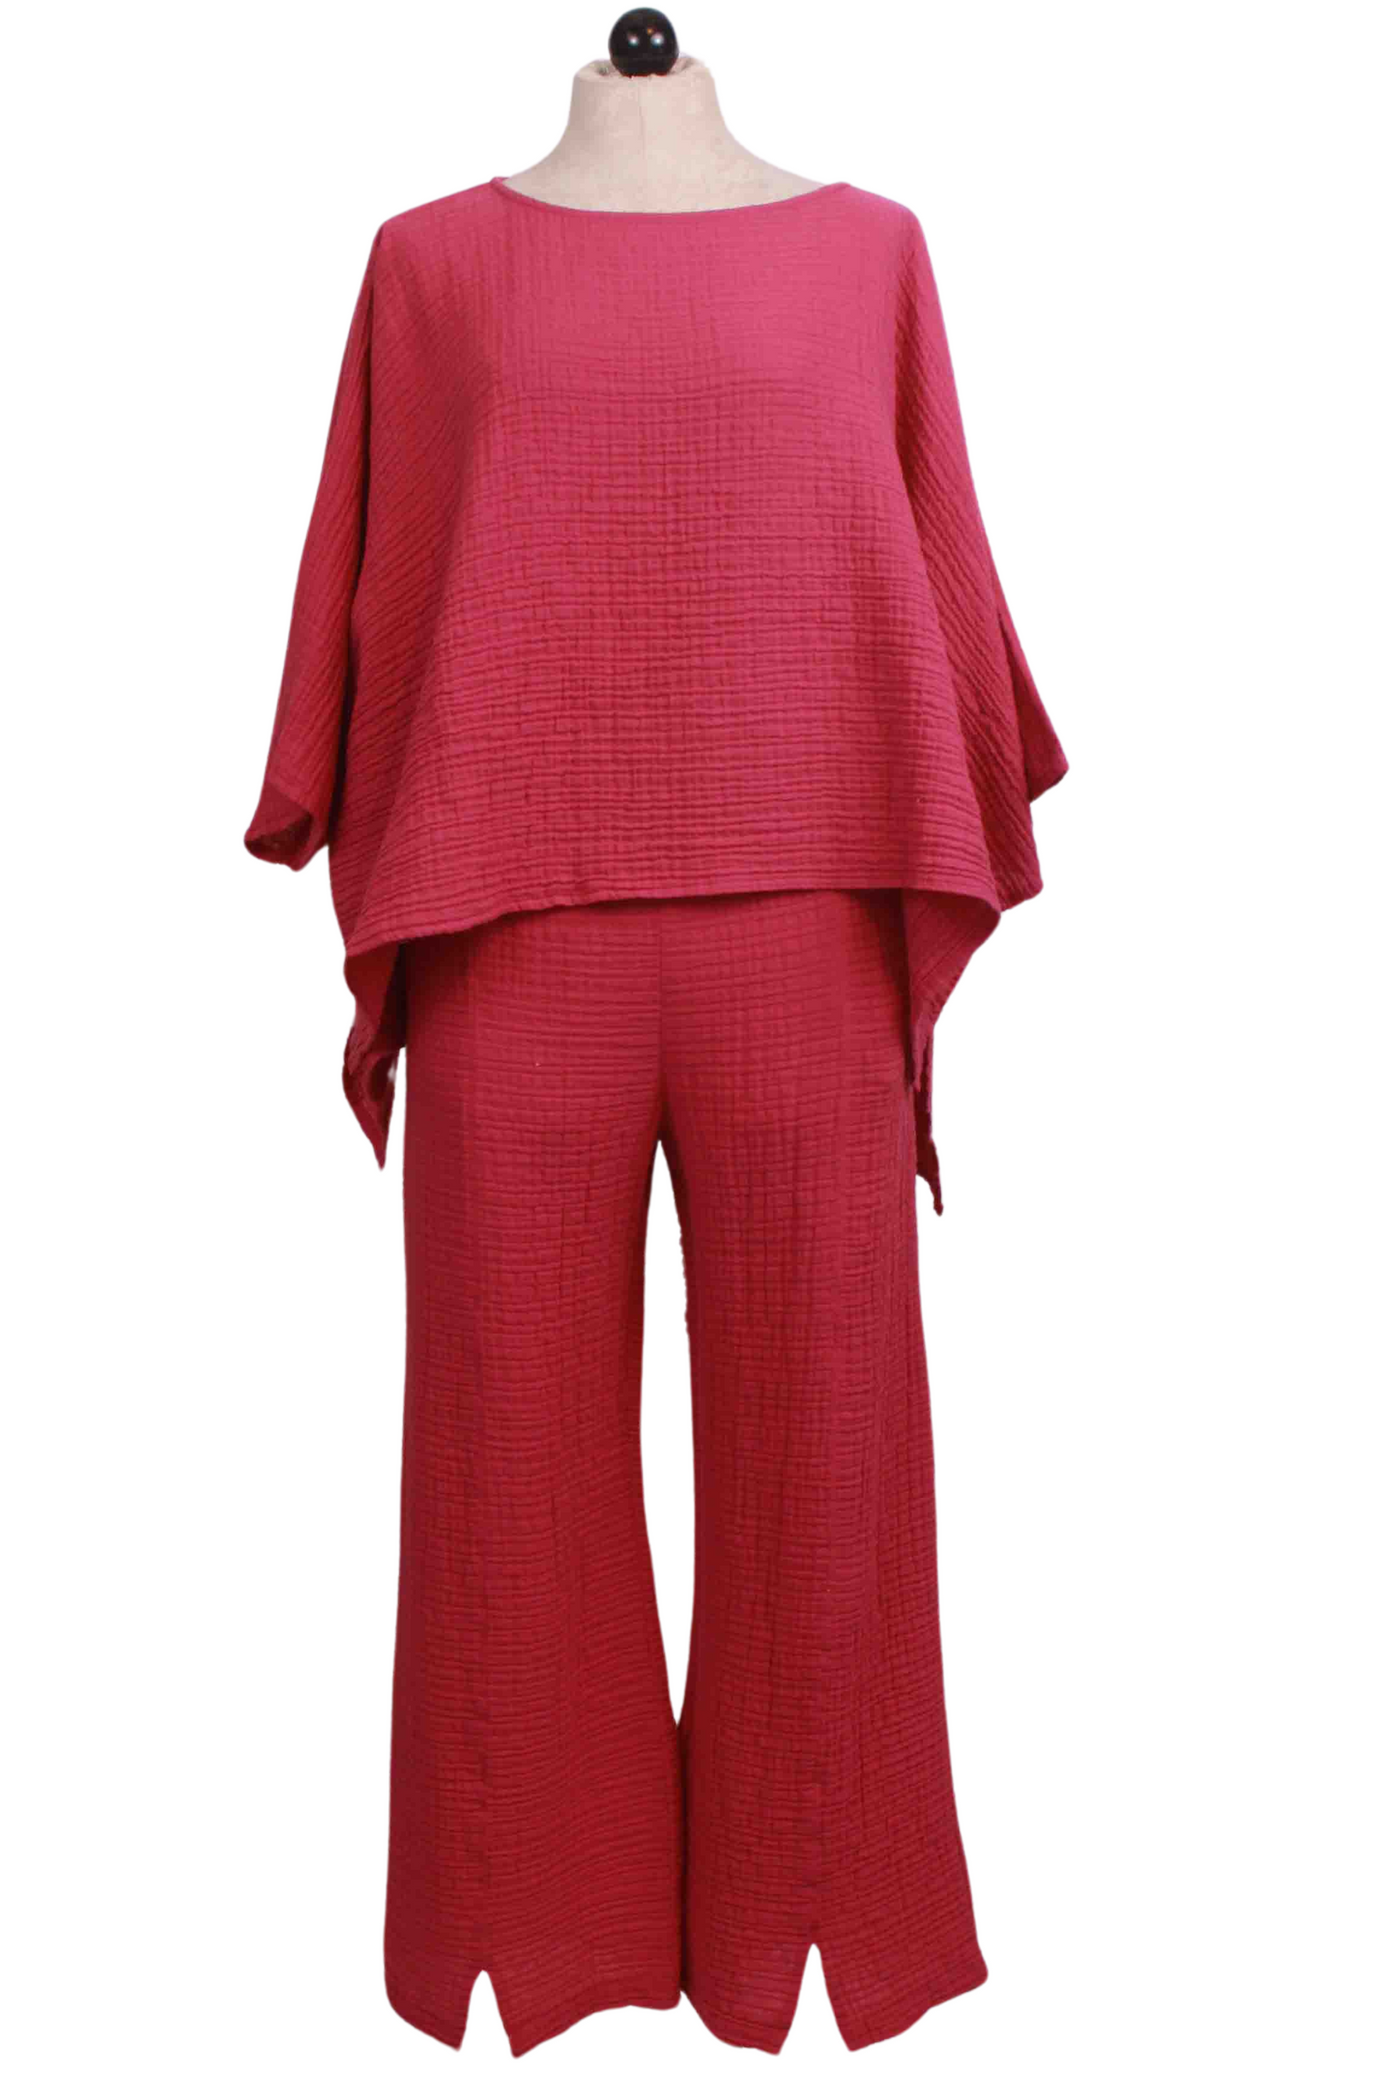 Oversized, Boxy Raspberry Alina Gauzy Cotton Top by Kozan paired with the matching split bottom pants by Kozan